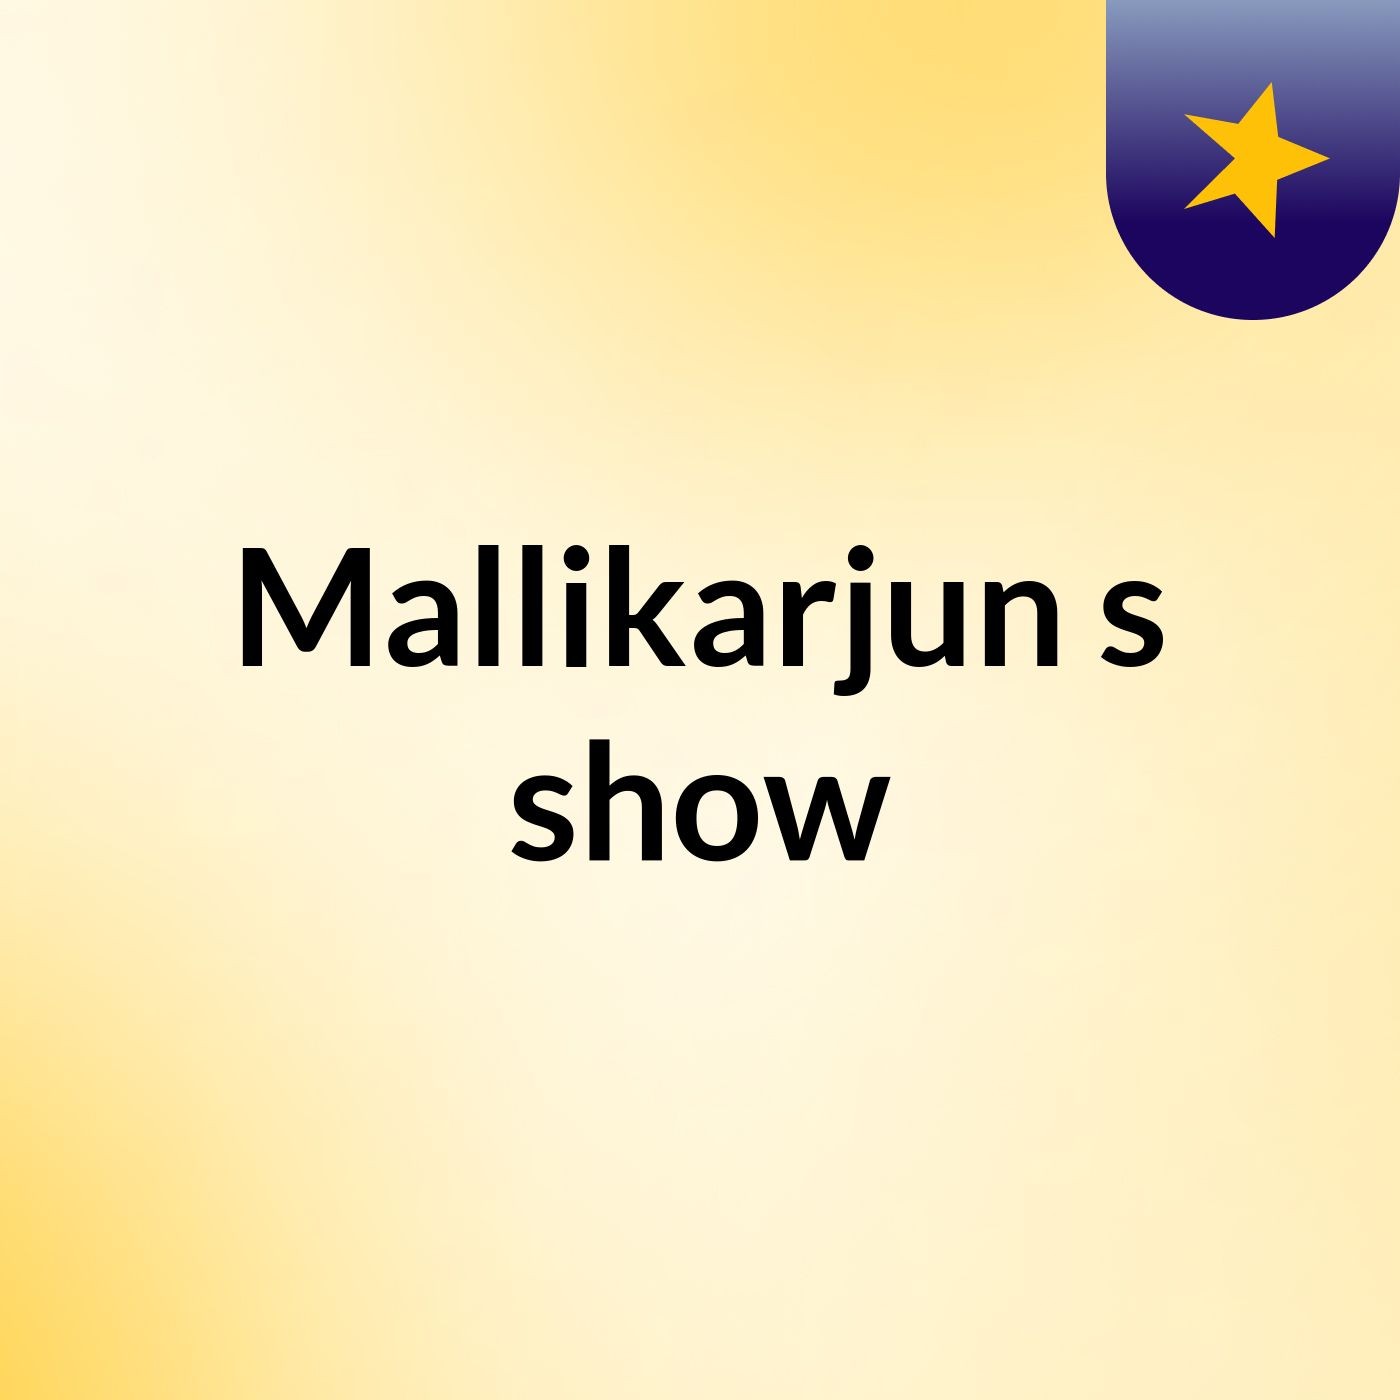 Mallikarjun's show